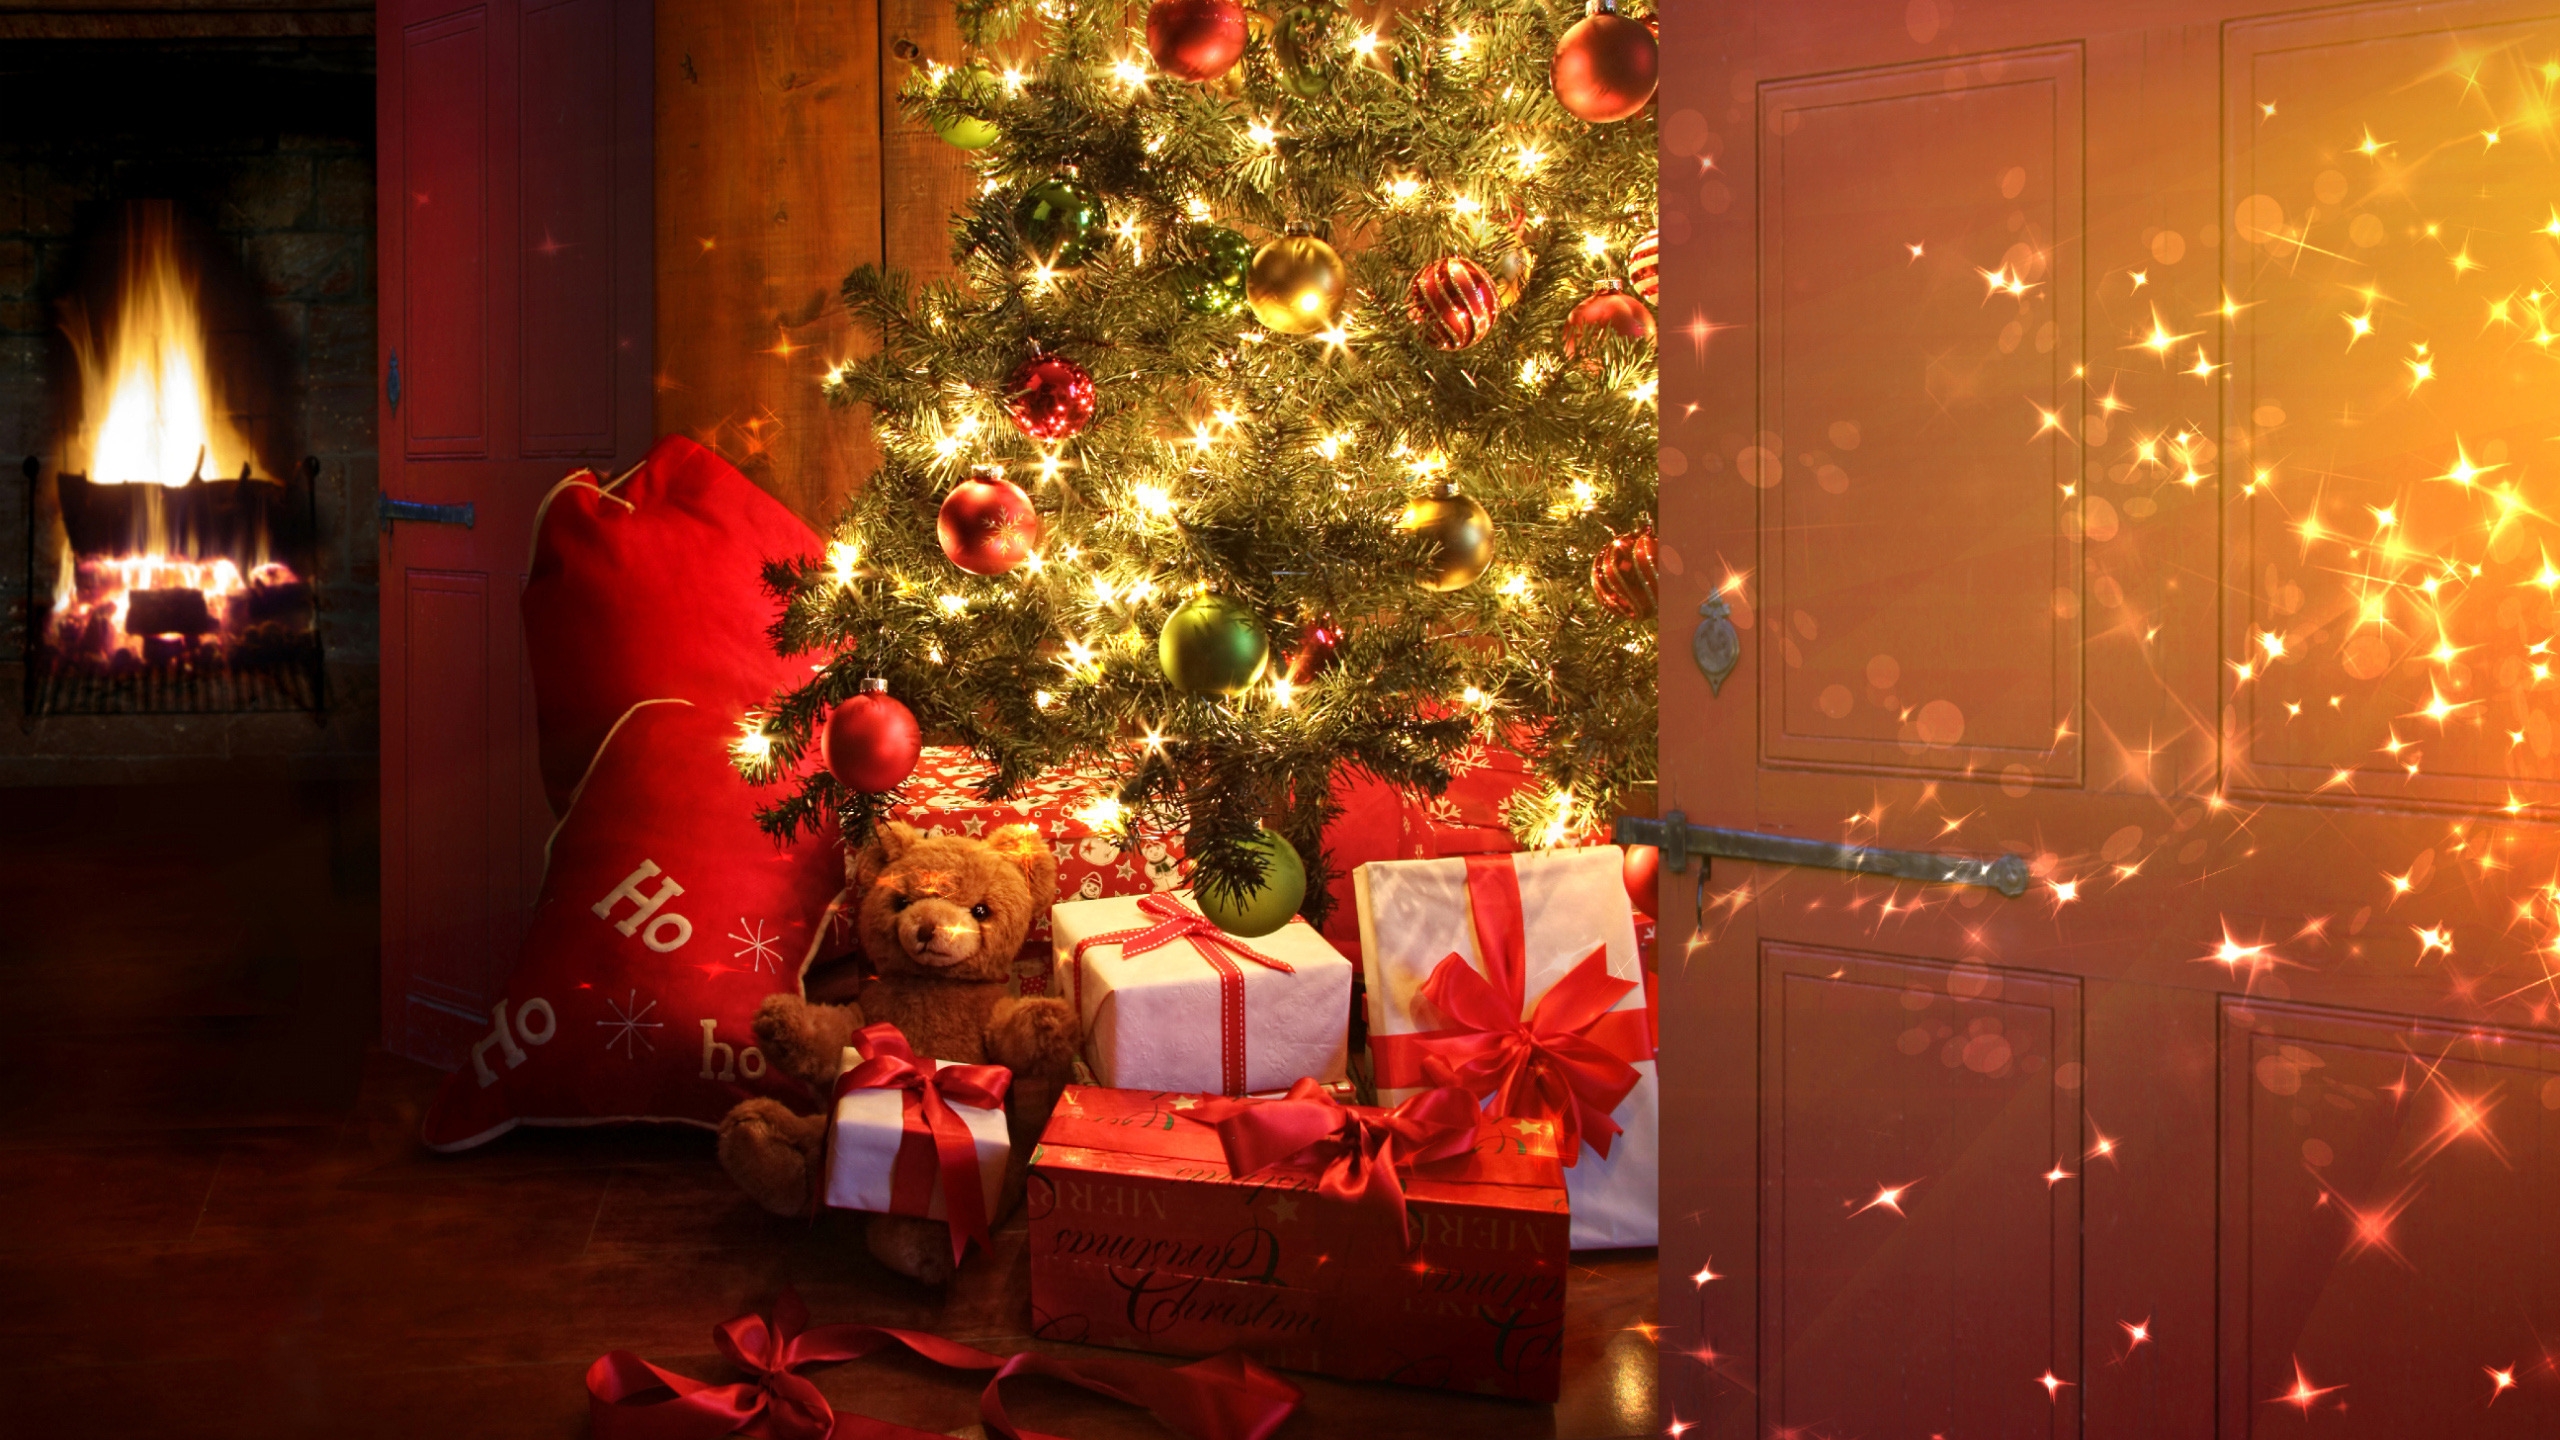 Amazing Christmas Tree for 2560x1440 HDTV resolution